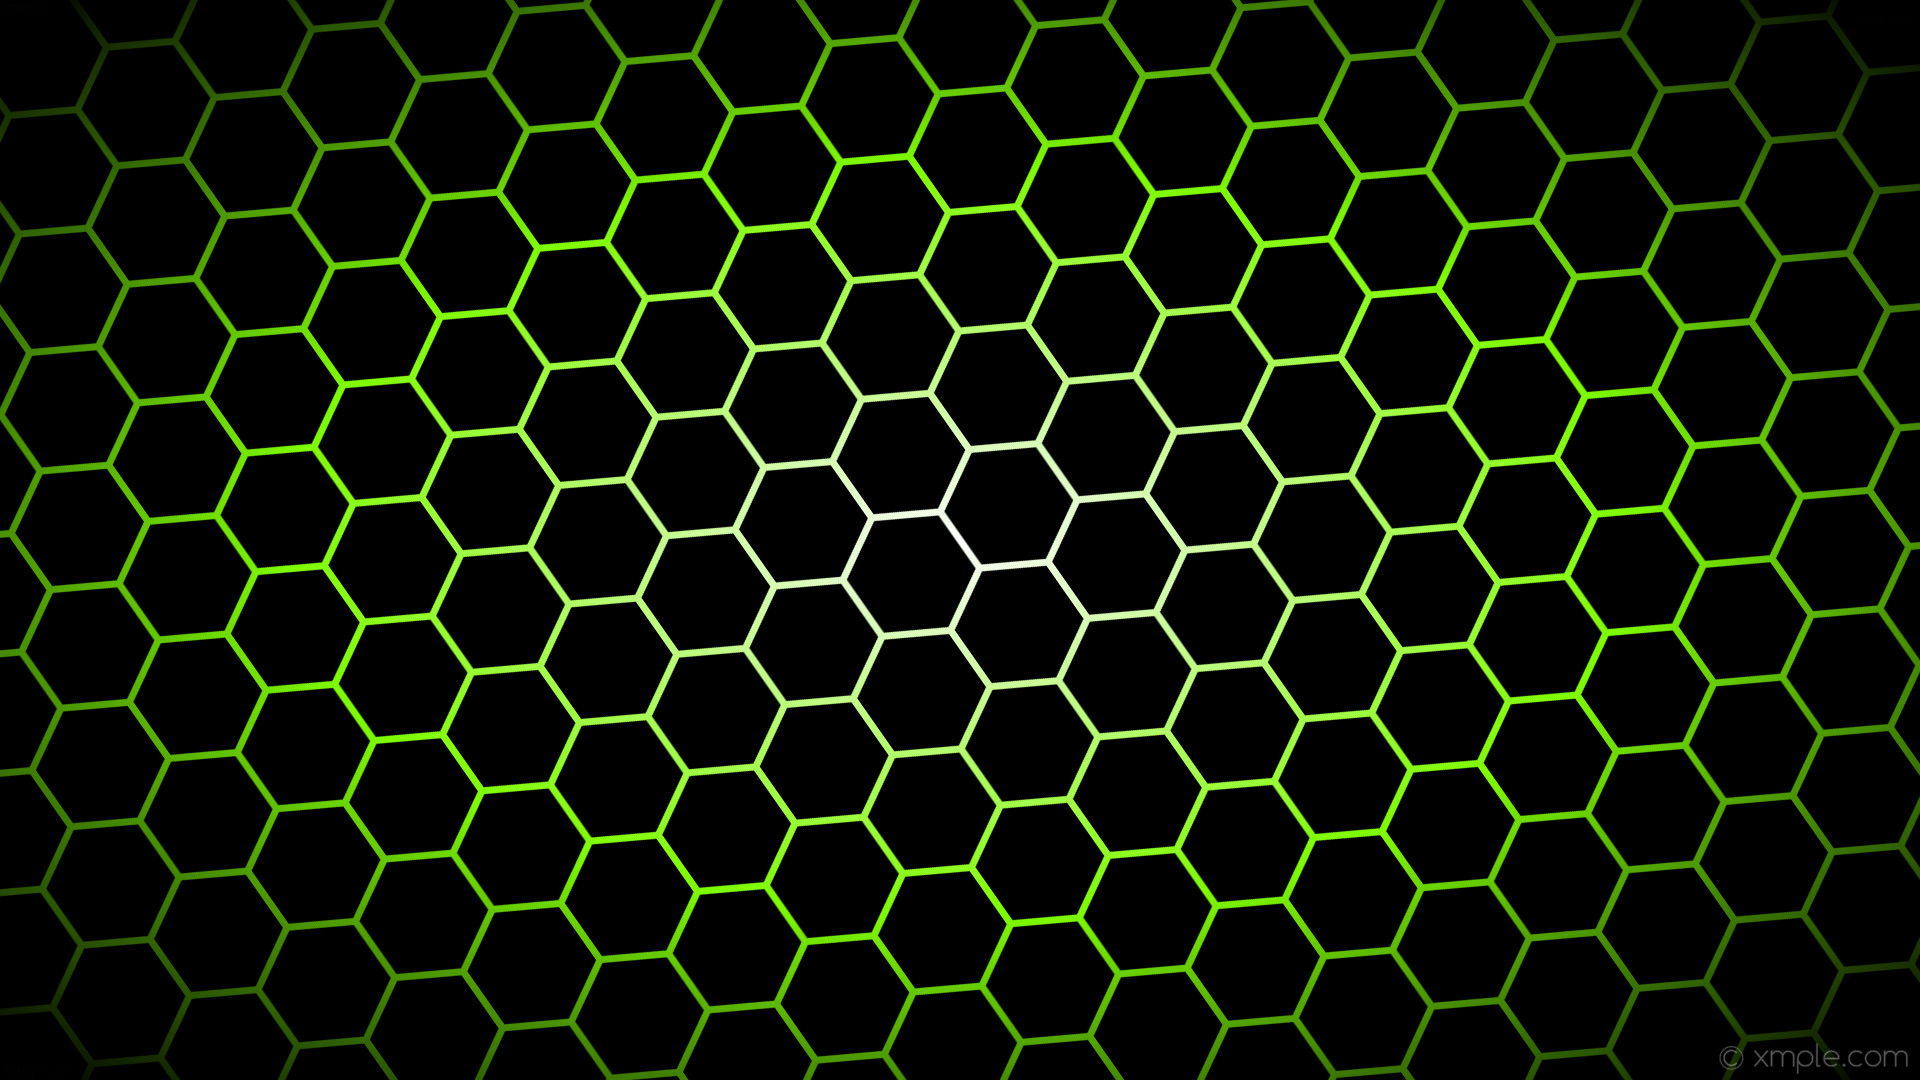 1920x1080 wallpaper black hexagon glow gradient white green chartreuse #000000  #ffffff #7fff00 diagonal 35